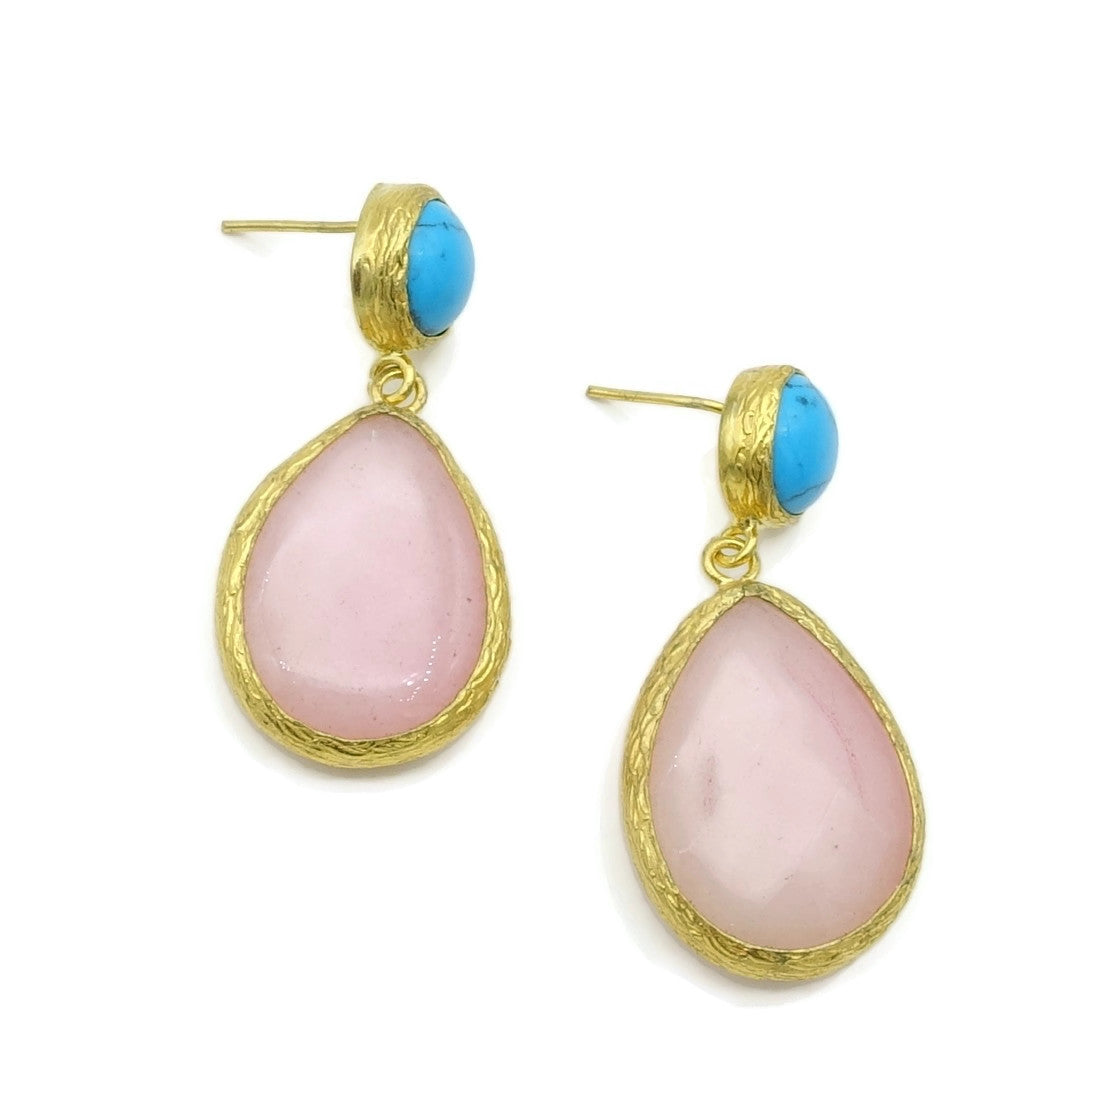 Aylas JTurquoise, Agate semi precious gemstone earrings - 21ct Gold plated- Handmade